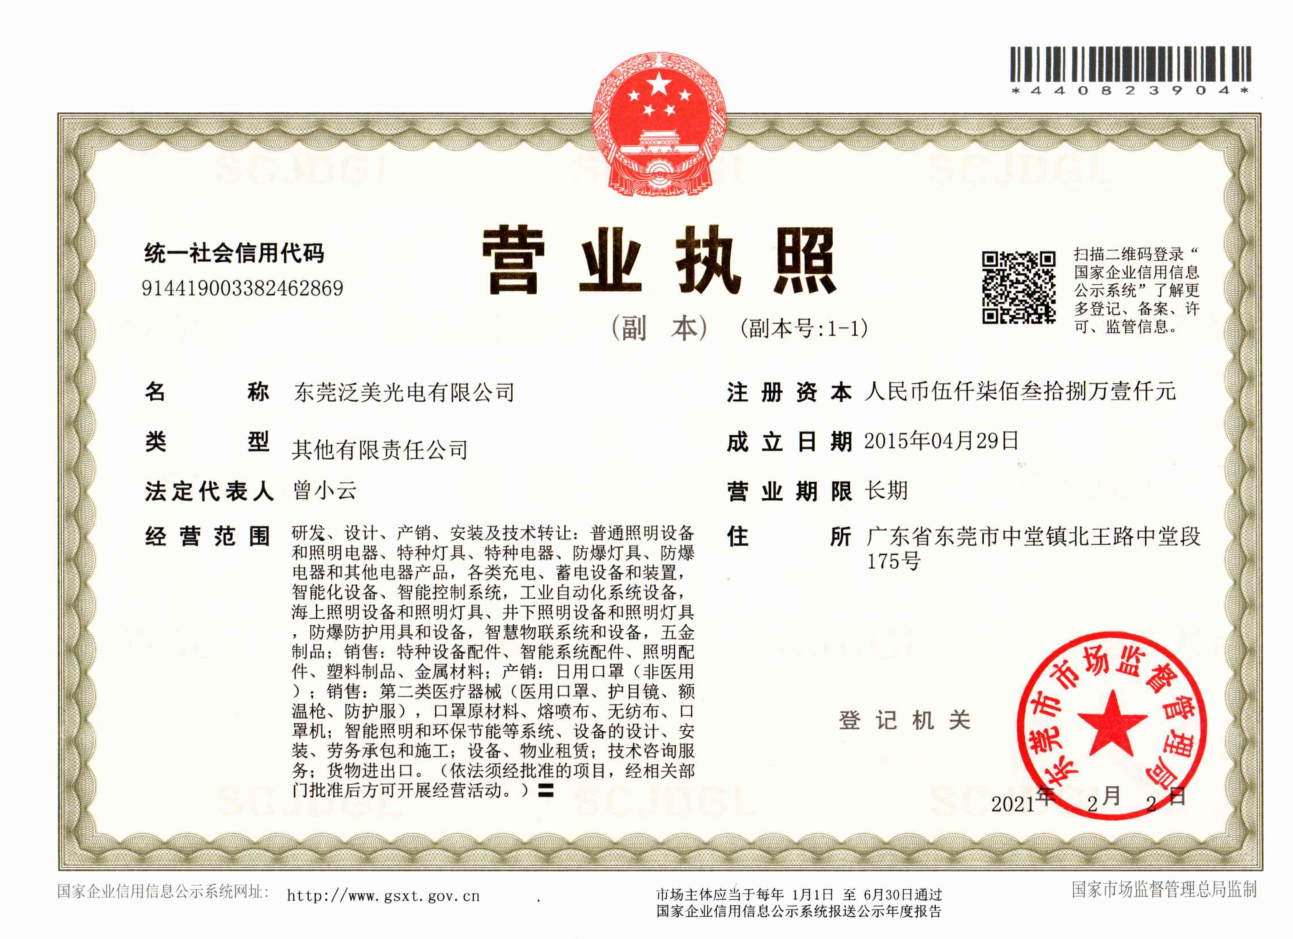 Business License Of Dongguan Pan American Electronics Co., Ltd.